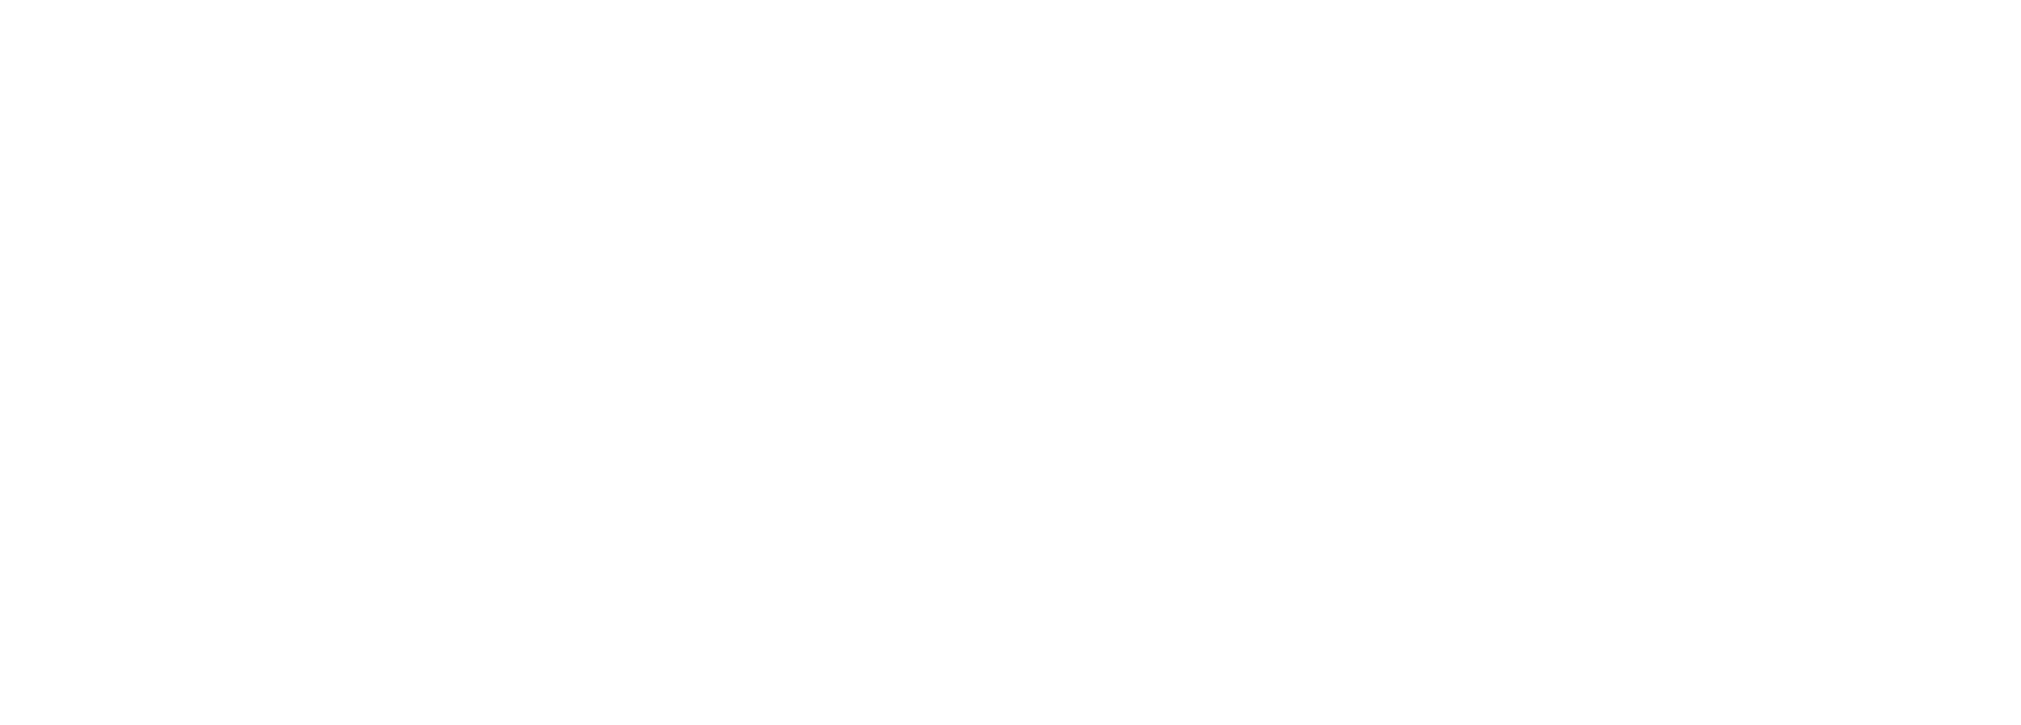 SeaView Immigration